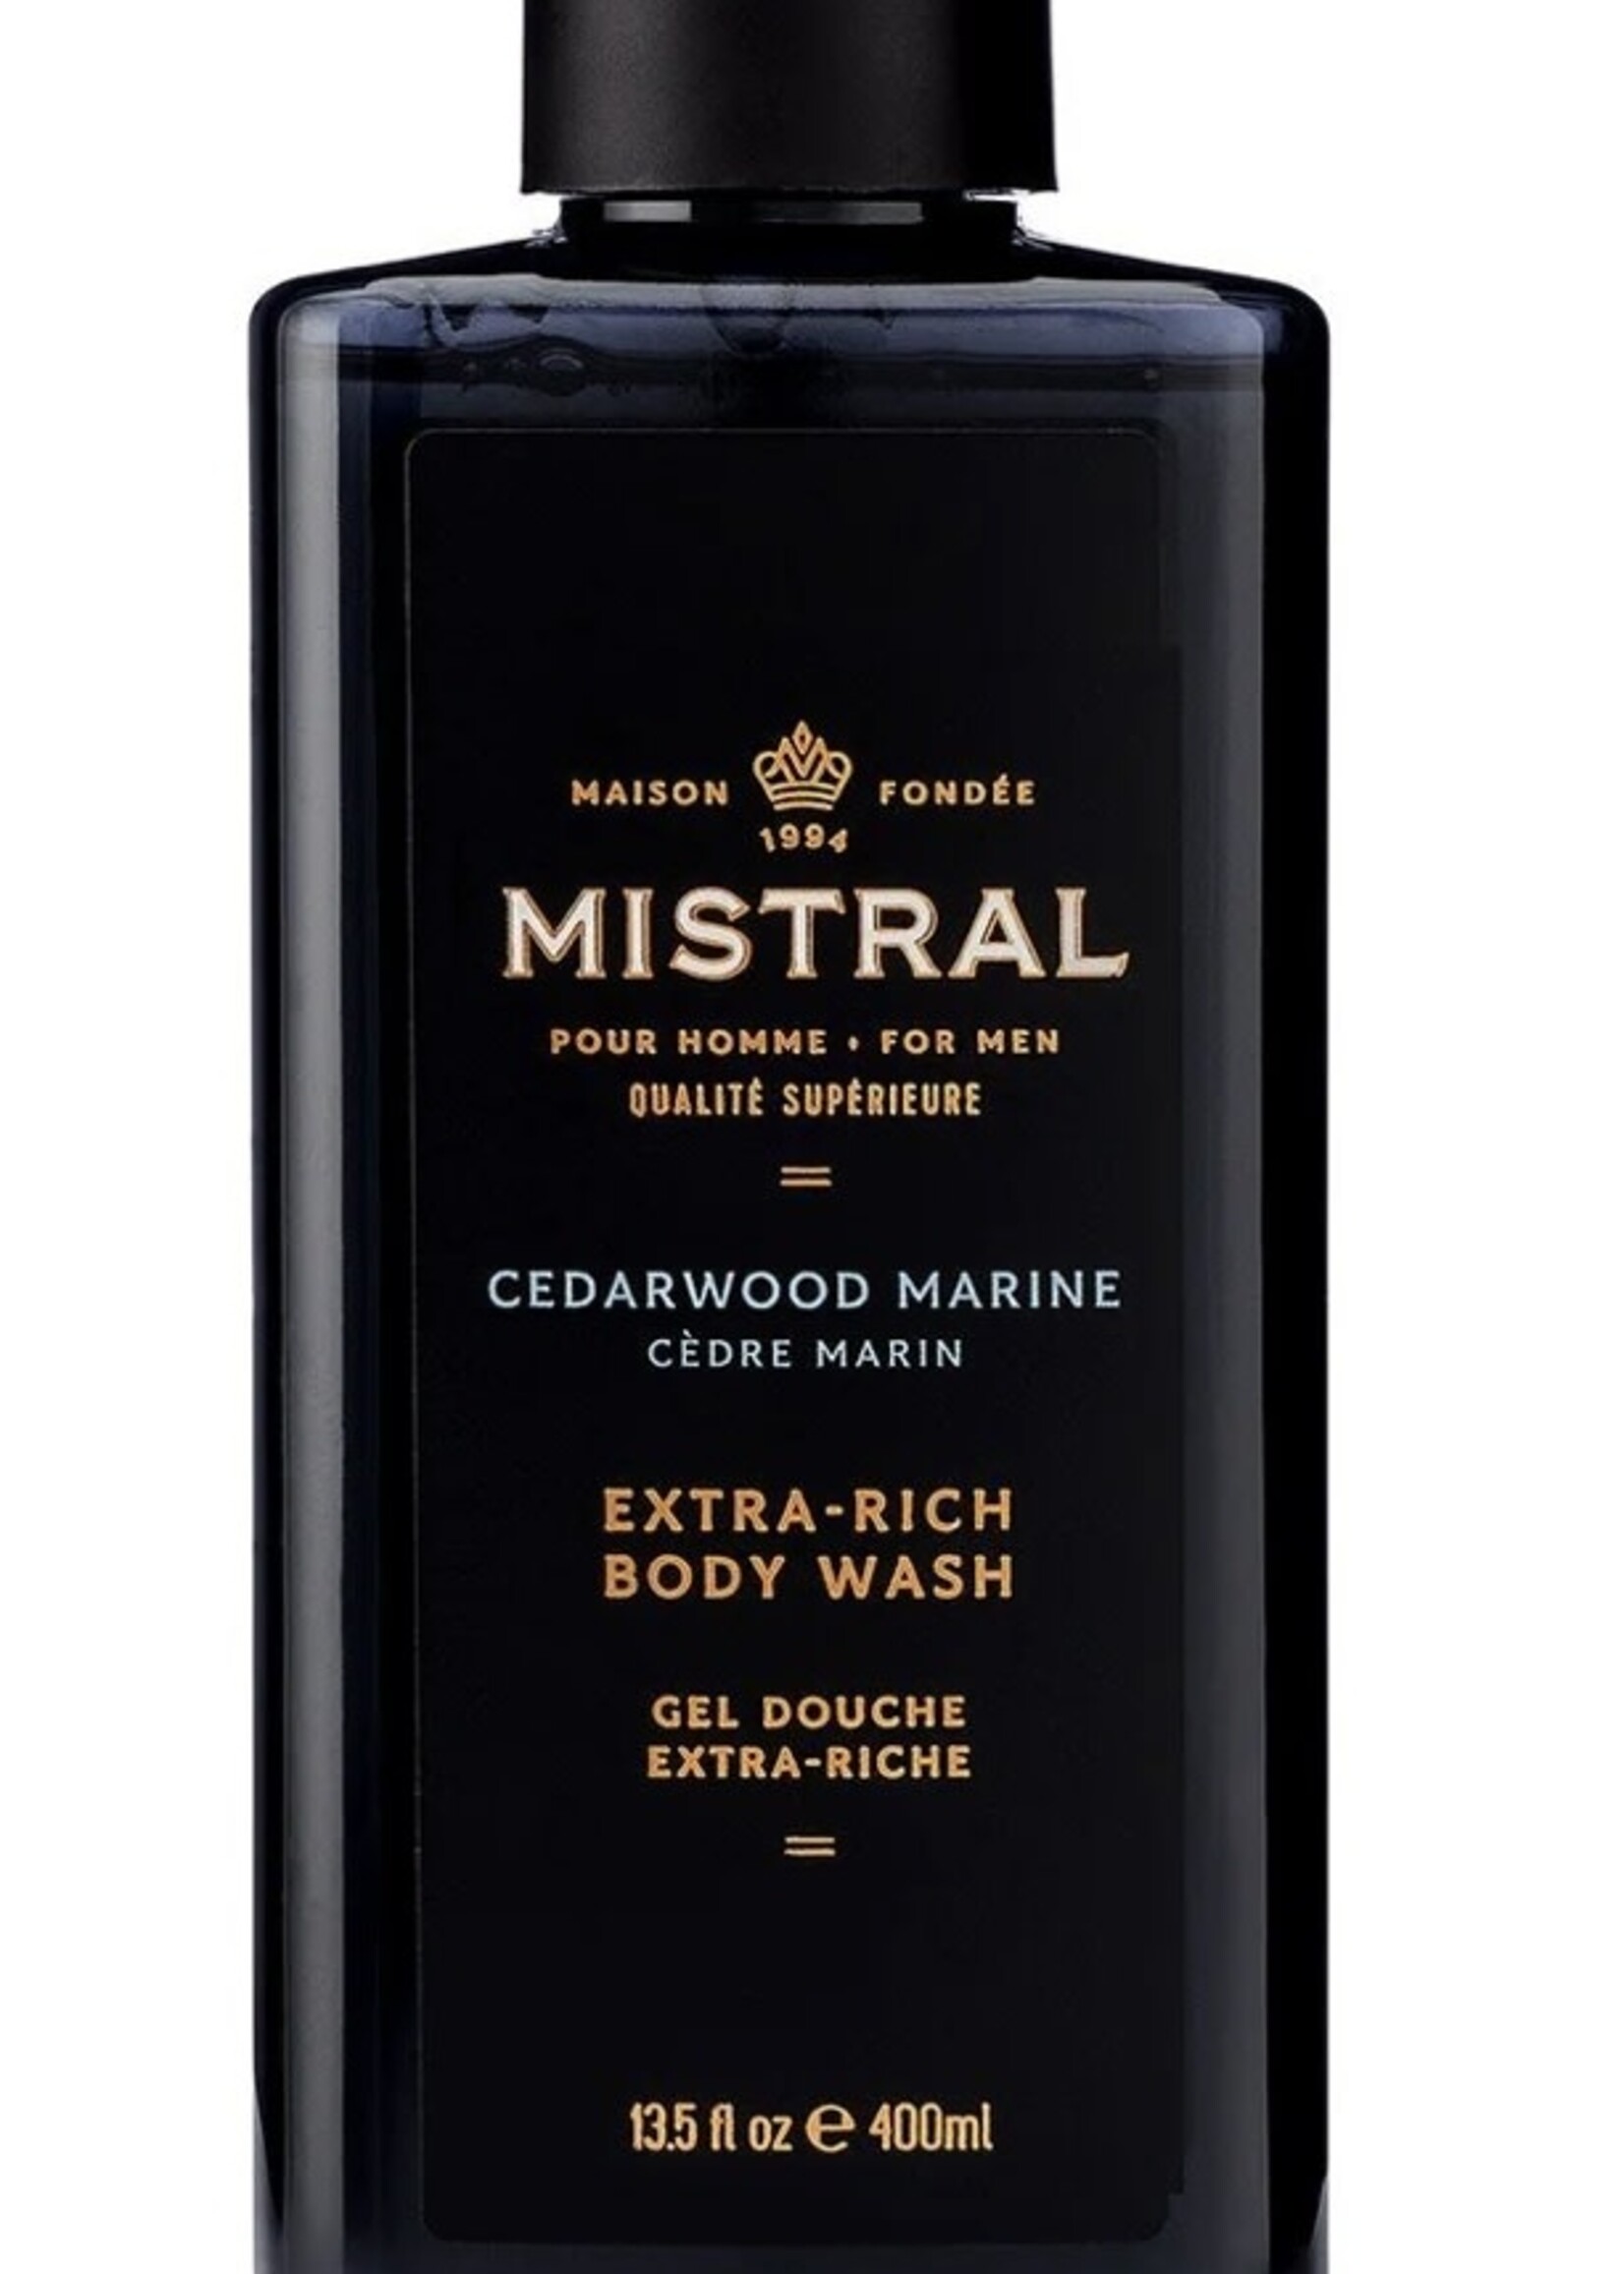 Mistral Mistral Men's Body Wash 13.5oz Cedarwood Marine